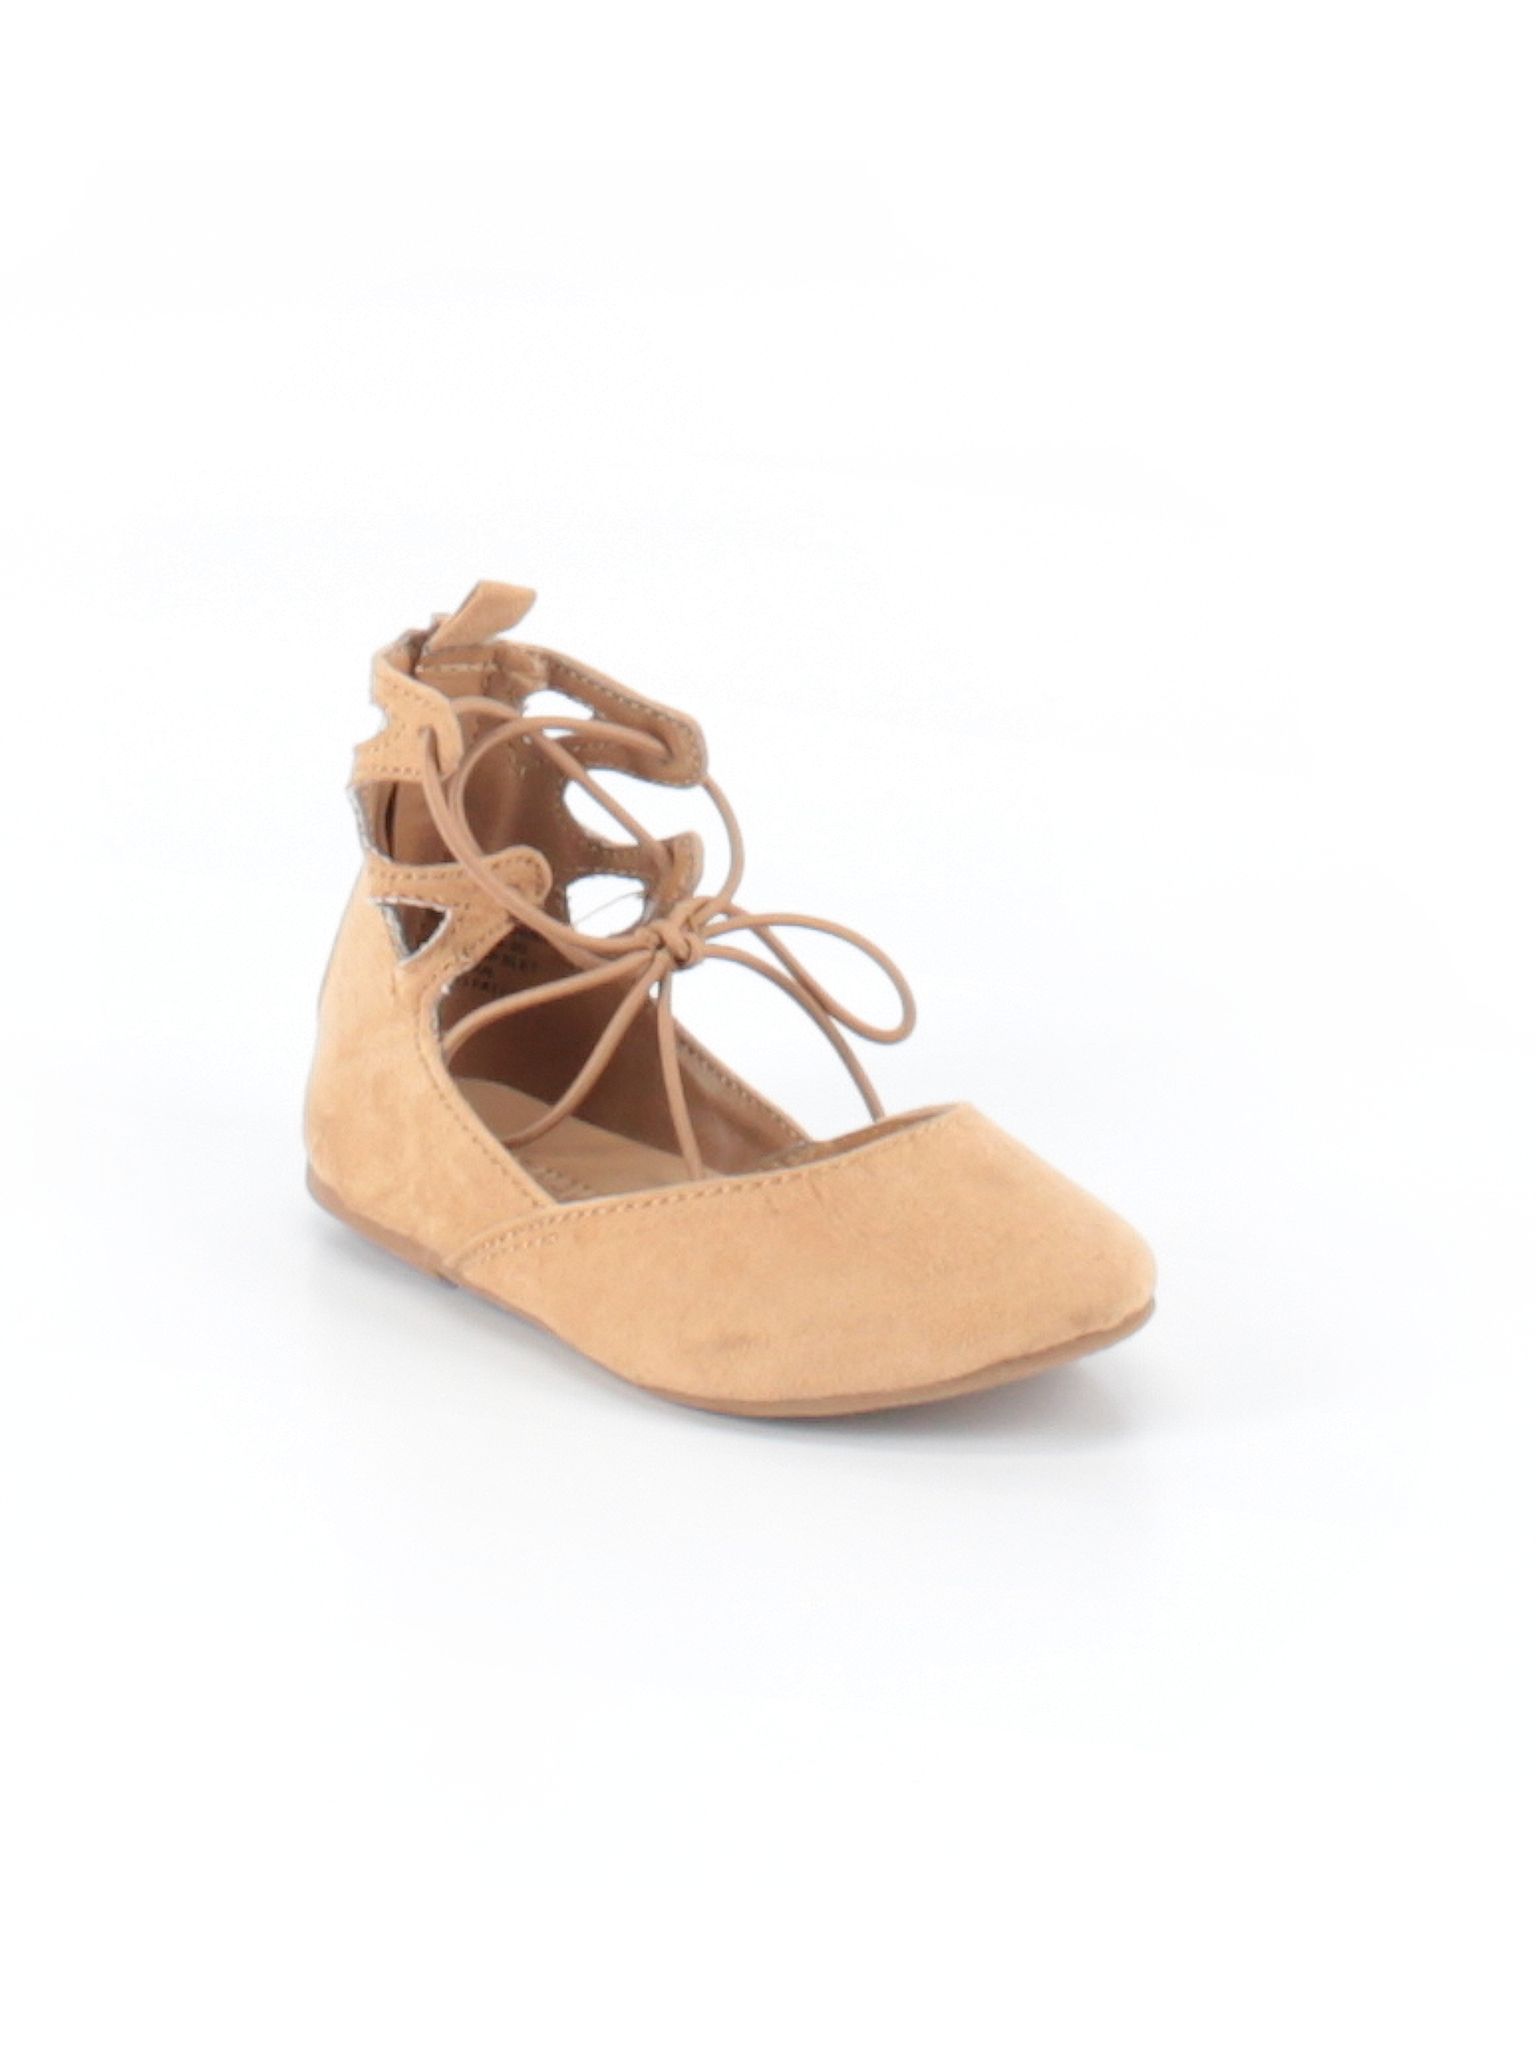 Old Navy Flats Size 6: Tan Girls Shoes - 34338208 | thredUP